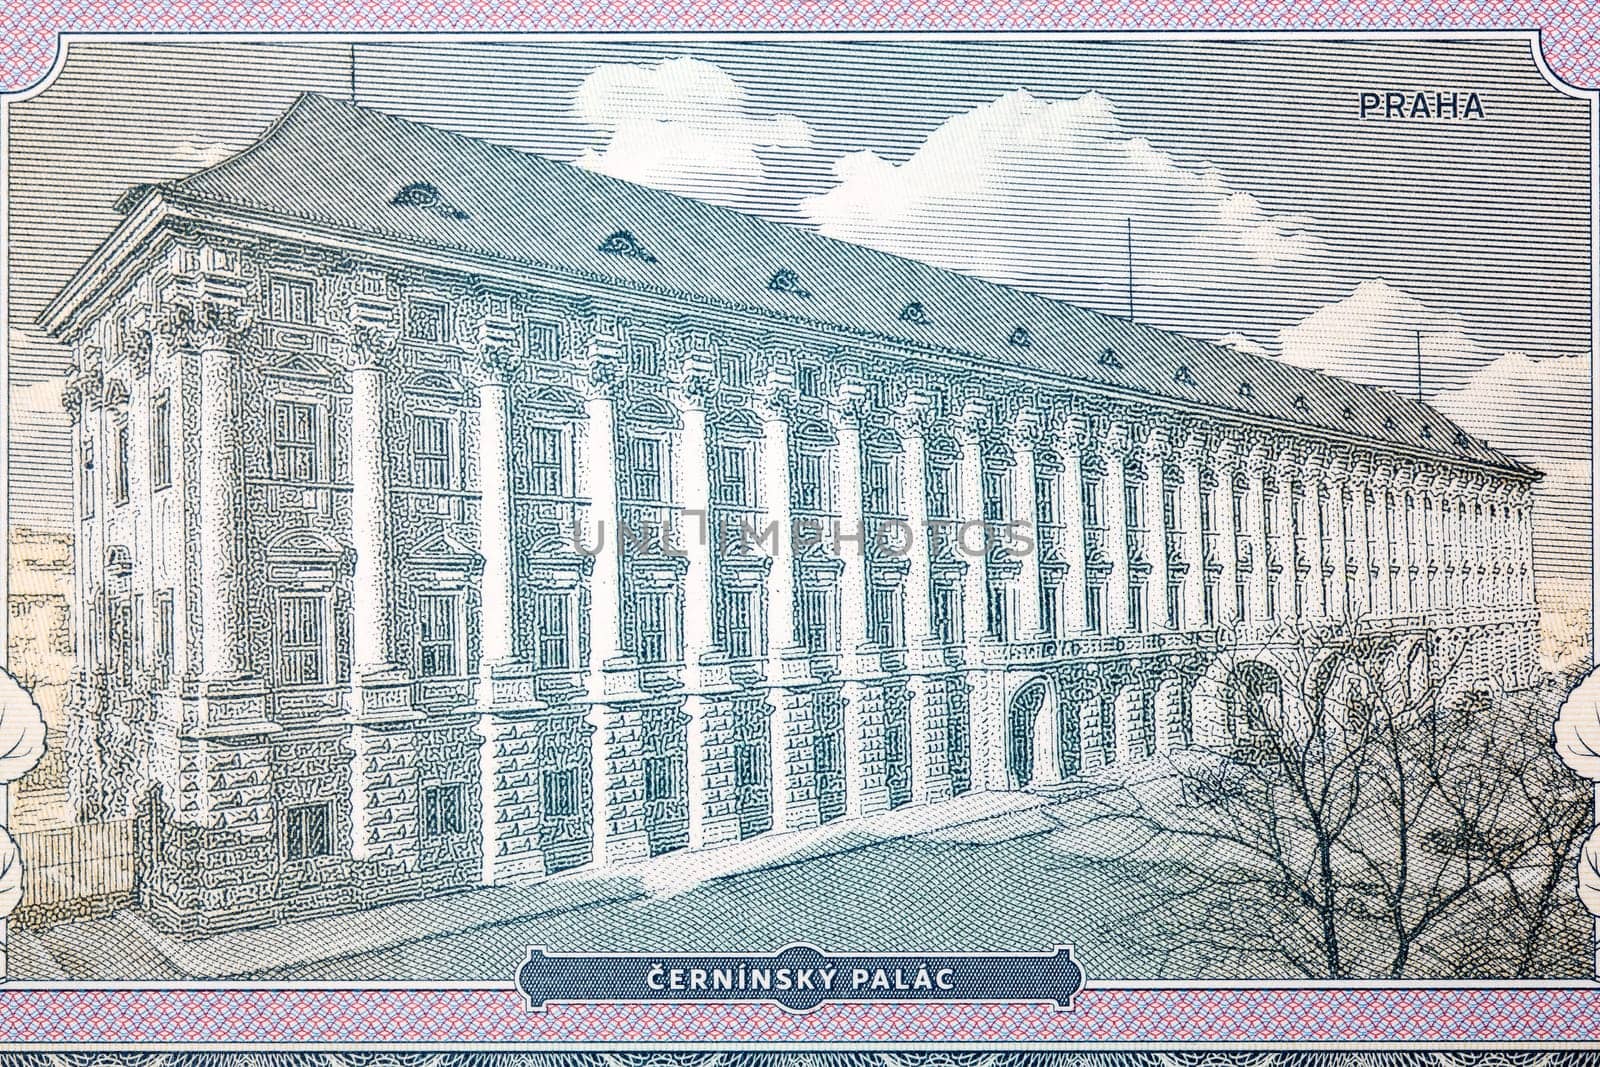 Czernin Palace in Prague from Czech money